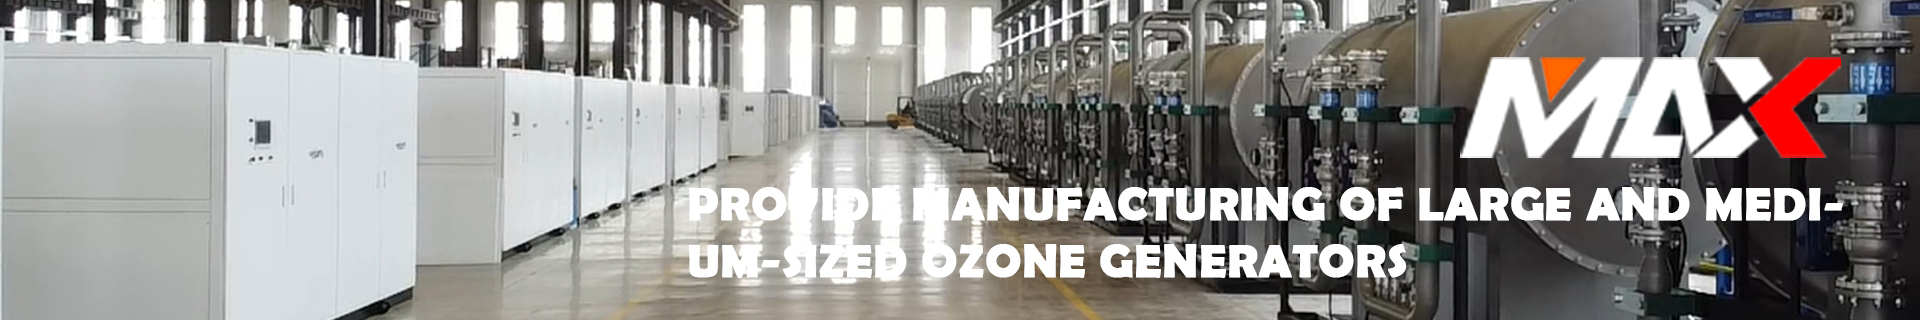 ceramicozonetubeParts-Maxozone-Globalhighqualityozonegenerator|ozoneoxidation|ozonegenerationsystemsolutionsprovider